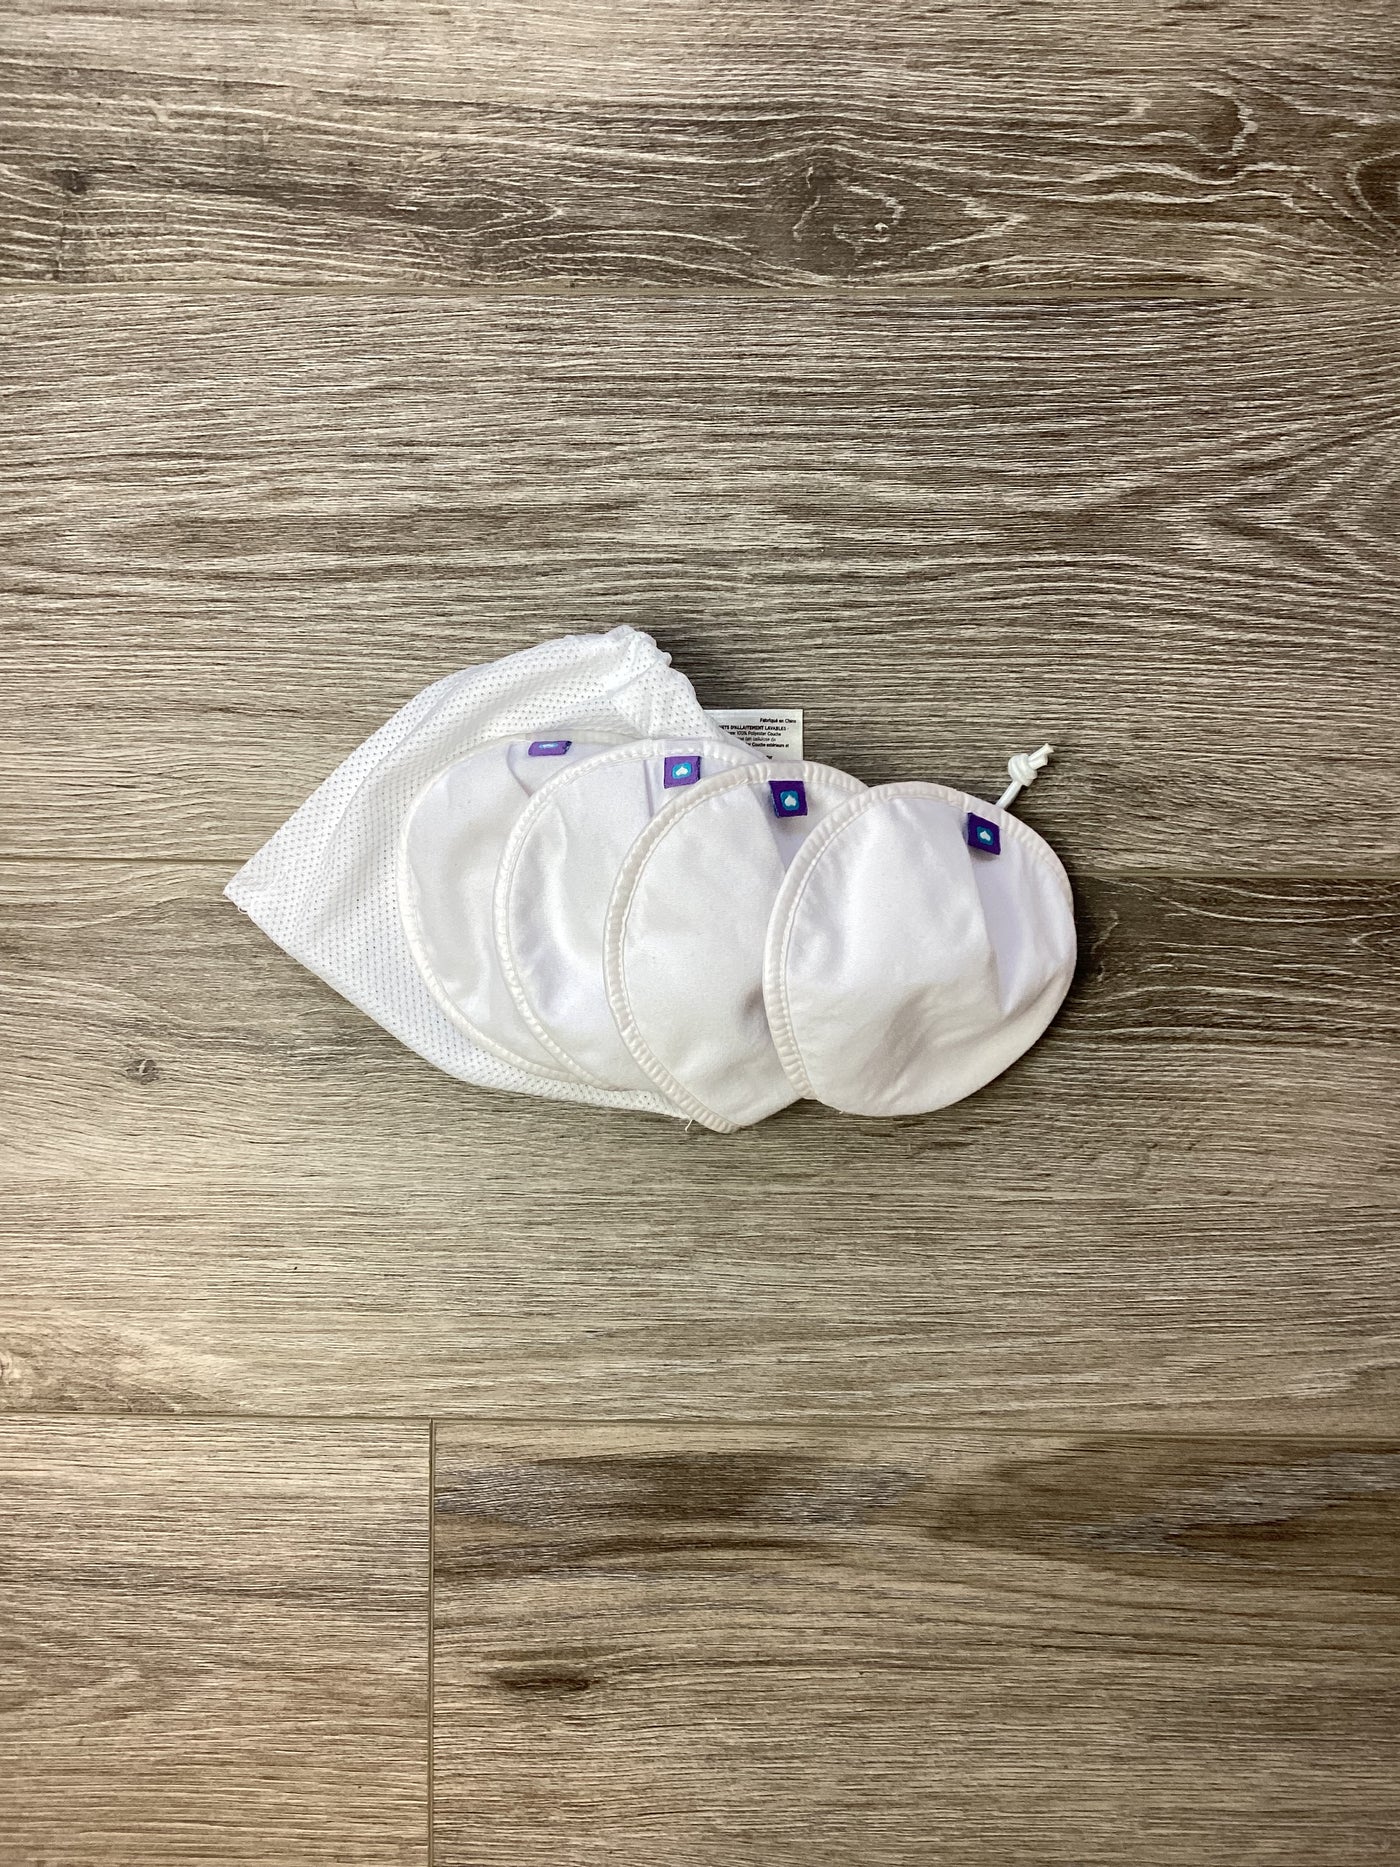 Lansinoh 4 x white washable nursing pads with mesh wash bag - One Size